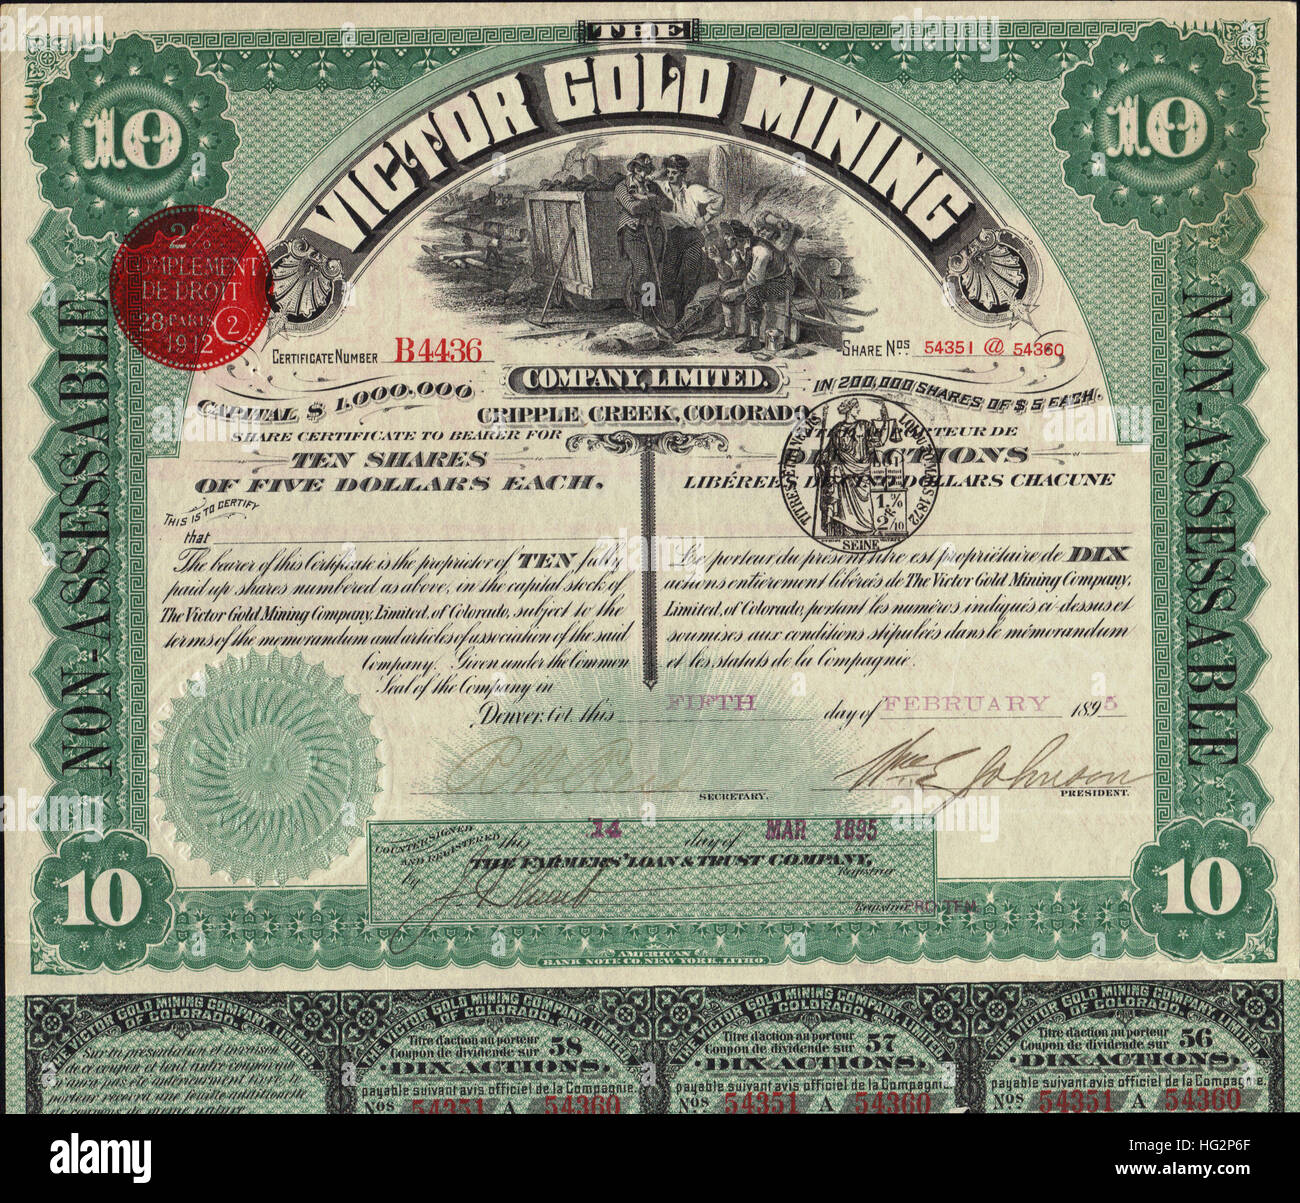 1895 Victor Gold Mining Company Limited - Certificados Bursátiles Bull Hill District - Cripple Creek, Colorado - USA Foto de stock